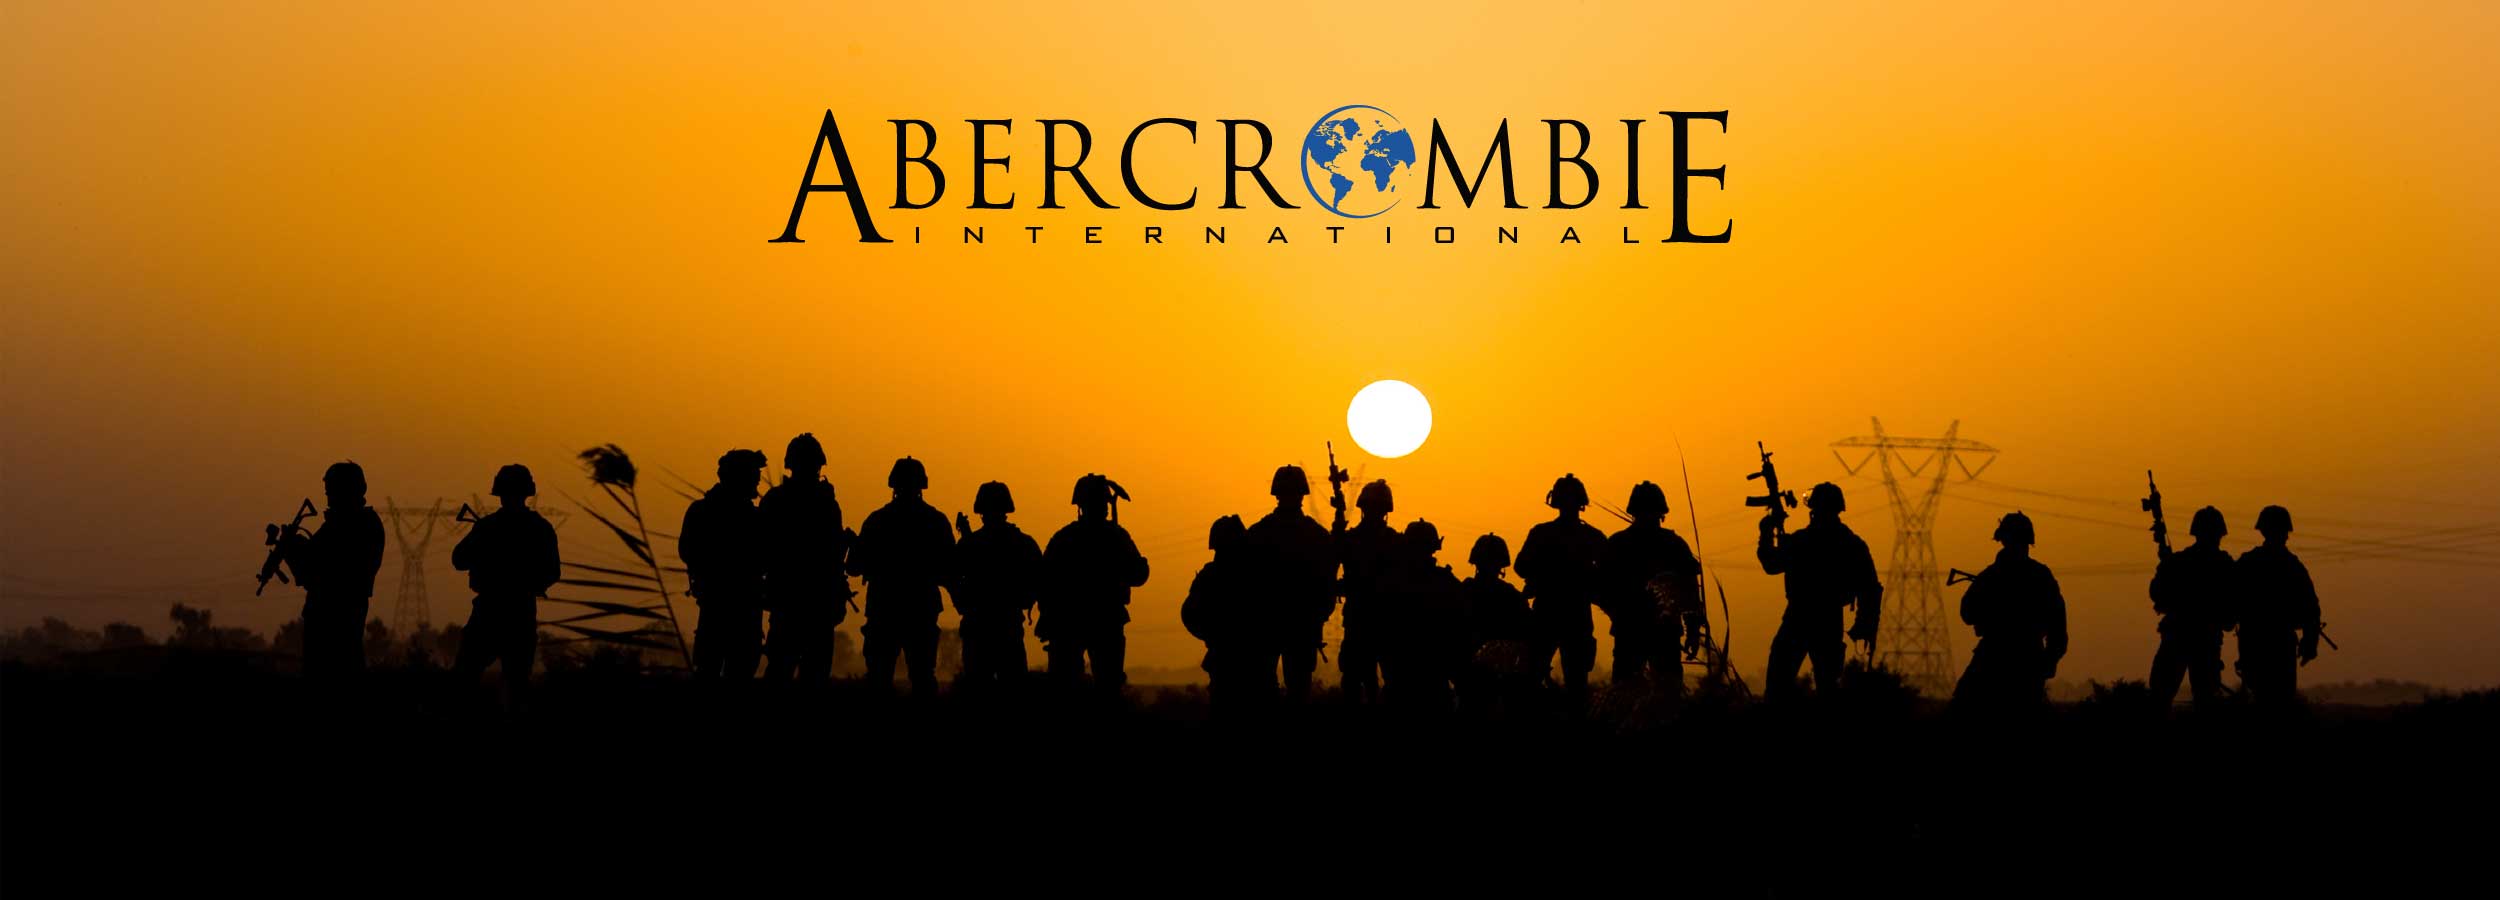 Abercrombie International